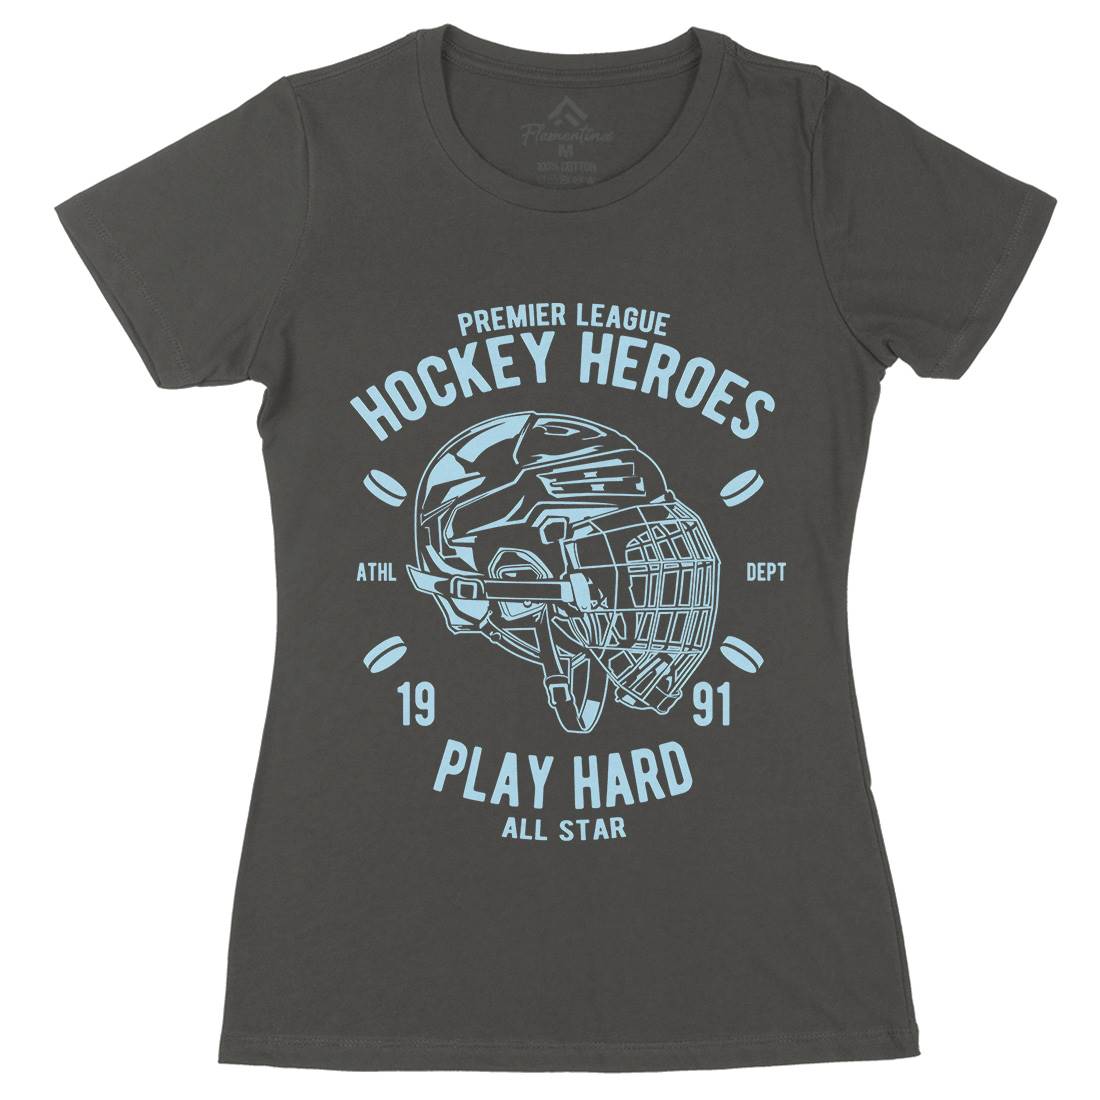 Hockey Heroes Womens Organic Crew Neck T-Shirt Sport A064